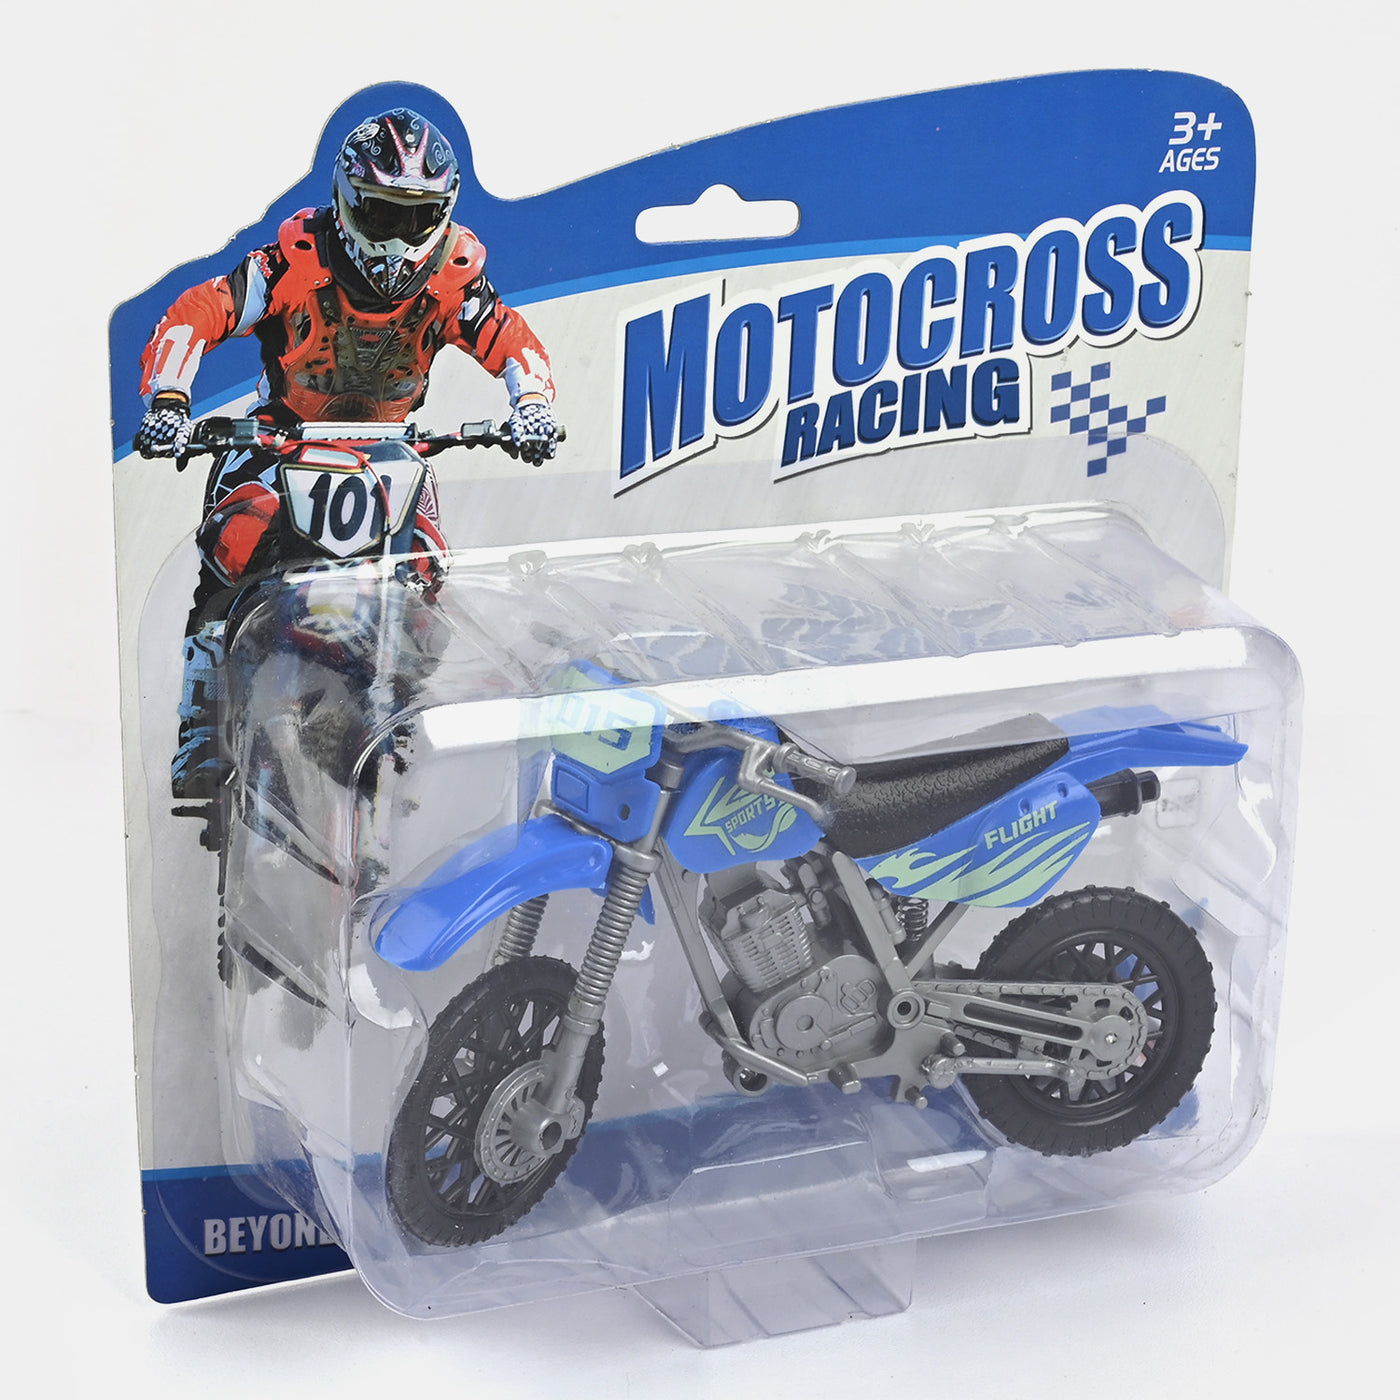 Model Motocross Racing Toy For Kids